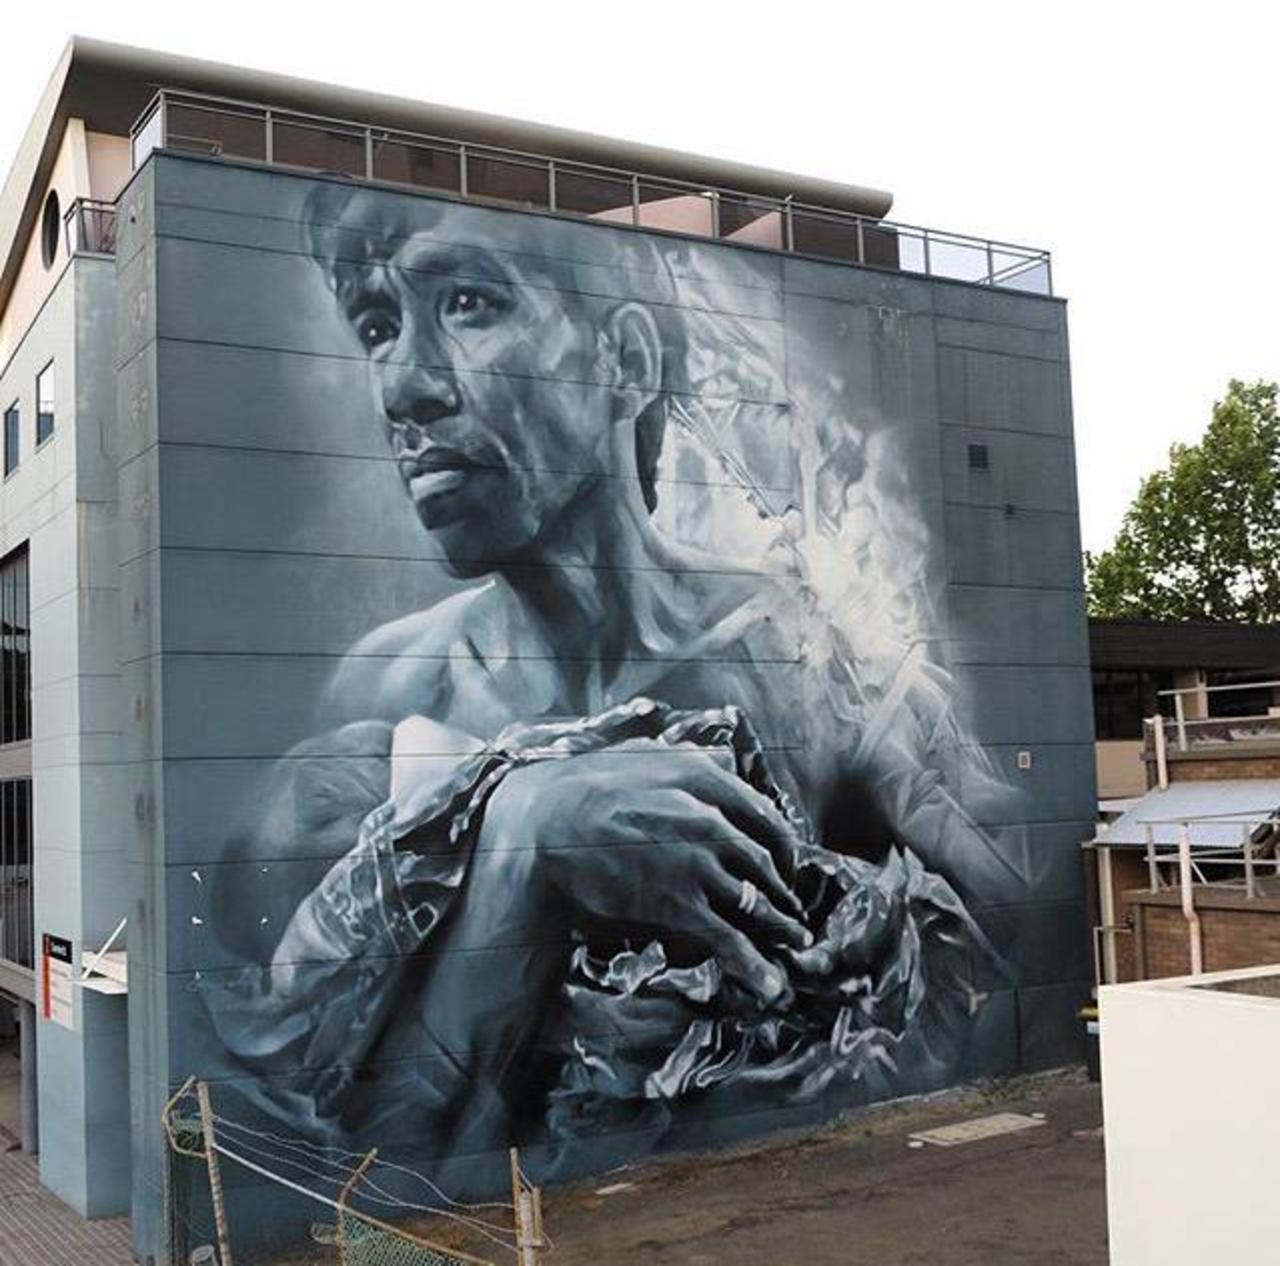 New Street Art by Guido Van Helten in Wollongong Australia 

#art #graffiti #mural #streetart http://t.co/dm8NC4SiDv